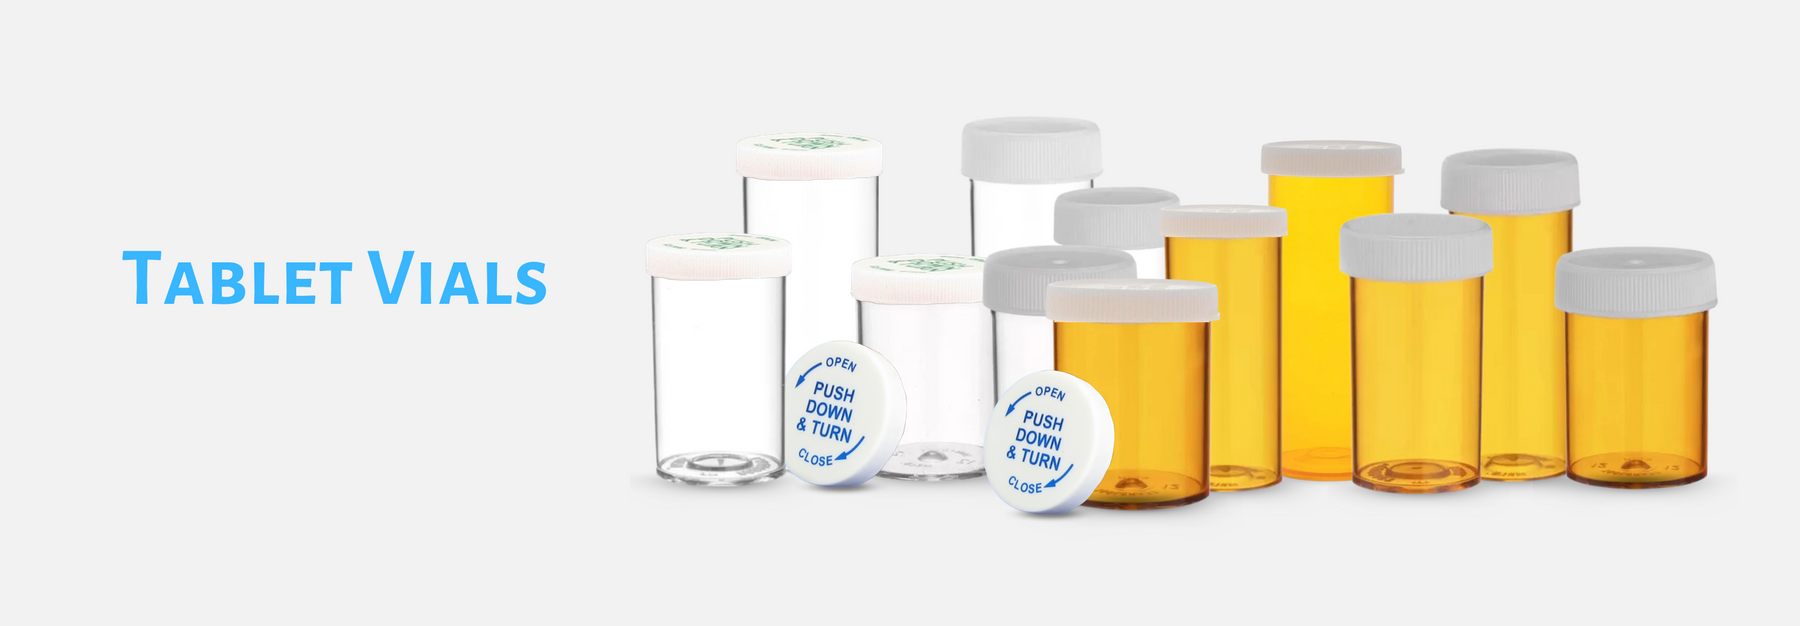 Tablet Vial | Medication storage vials | Pharmaceutical vials